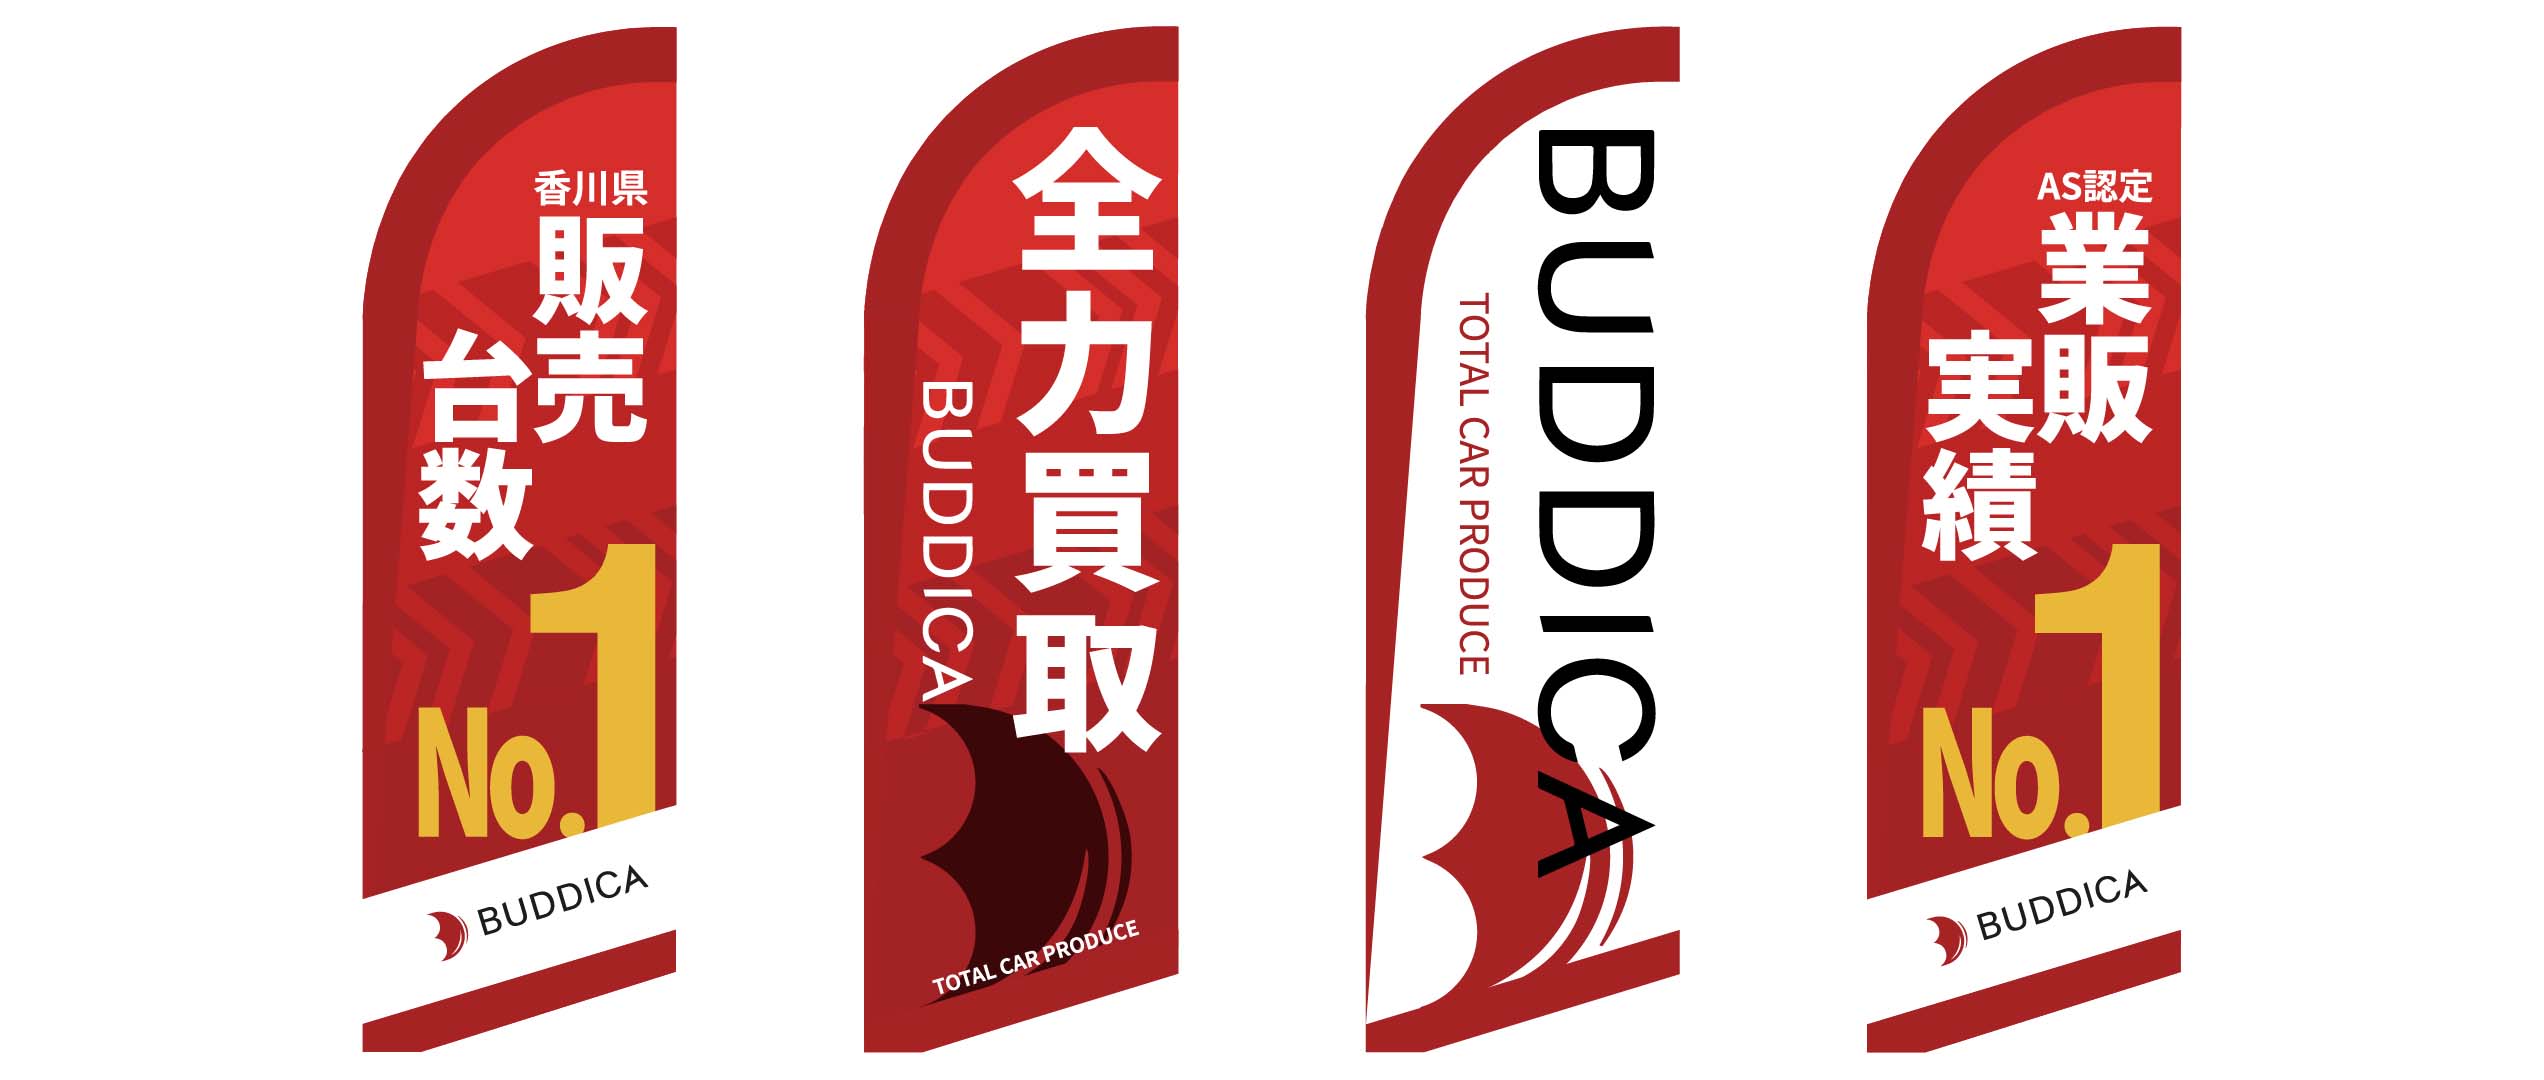 sp_band_buddica_banner